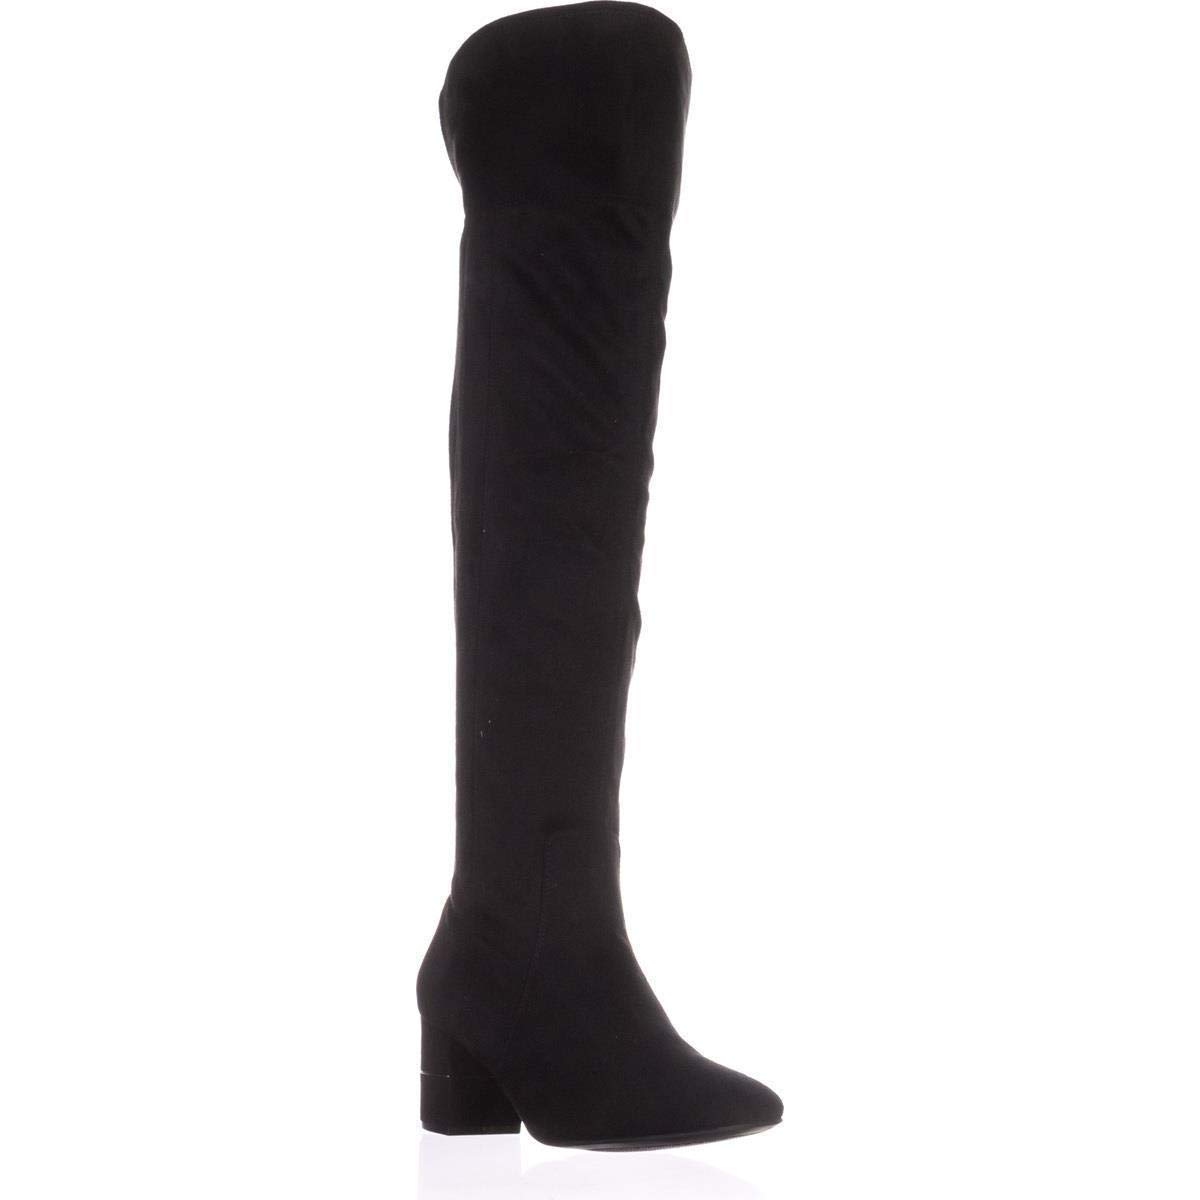 Alfani Womens Boots in Black Color, Size 5 NRP | eBay